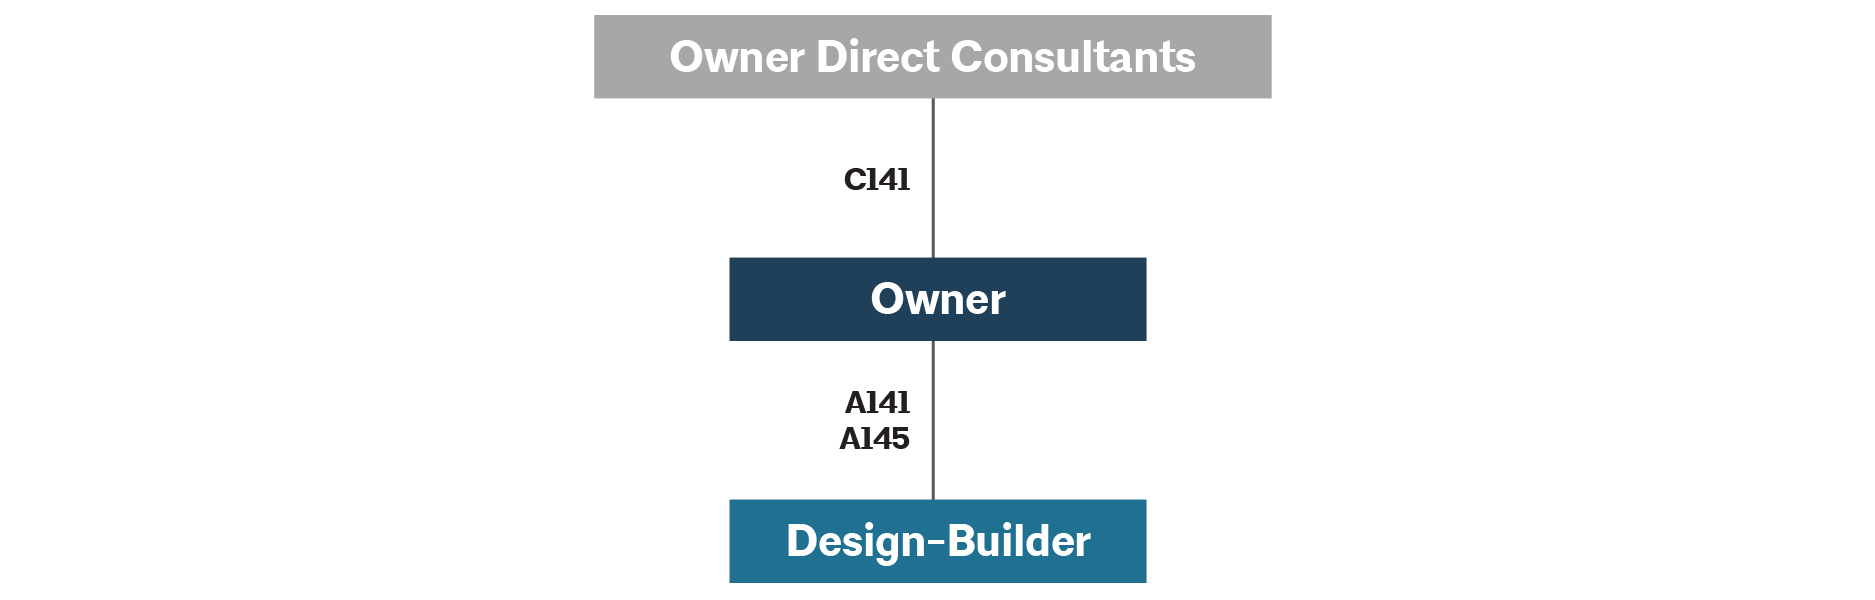 Design-Builder fully integrated